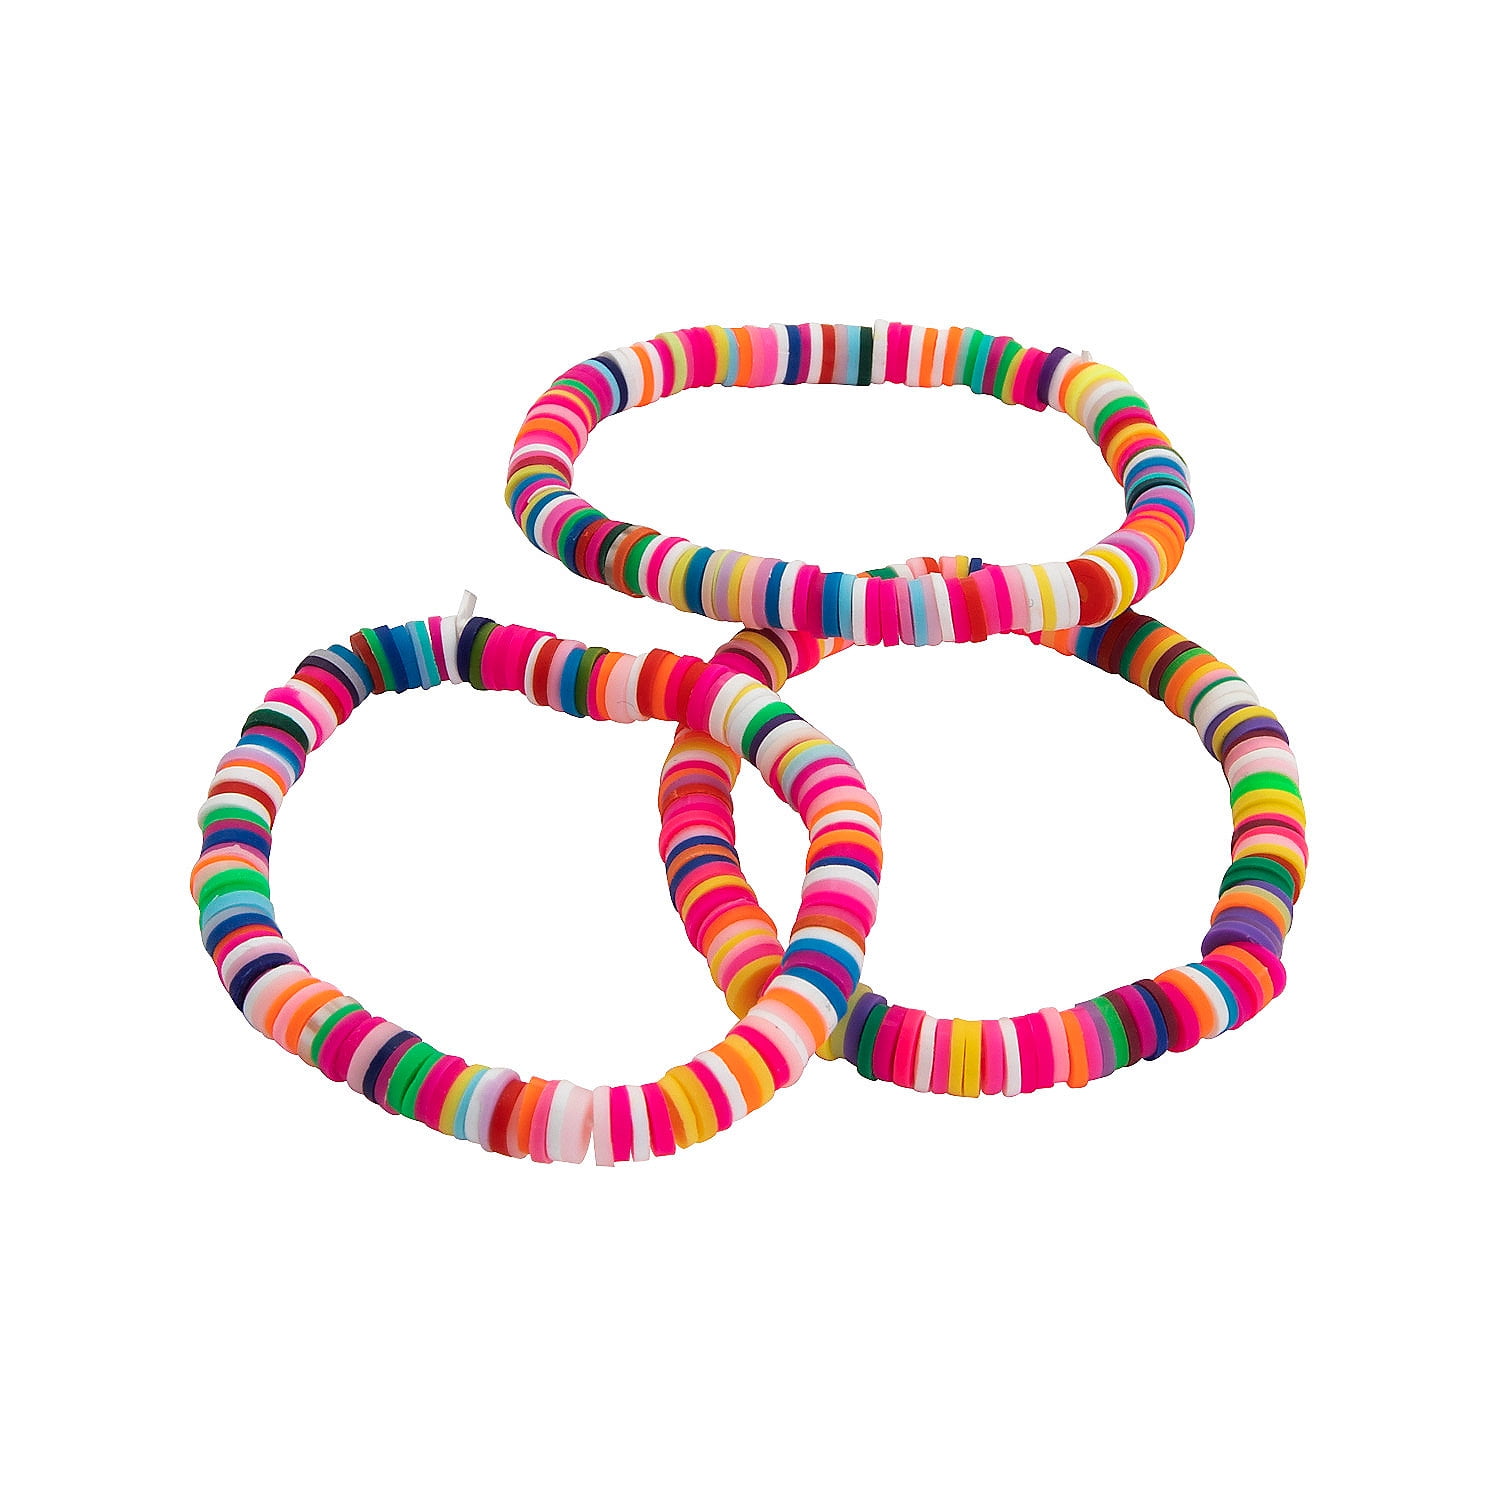 7Pcs Colorful Small Beads Bohemia Bangle Elastic Bracelet Set